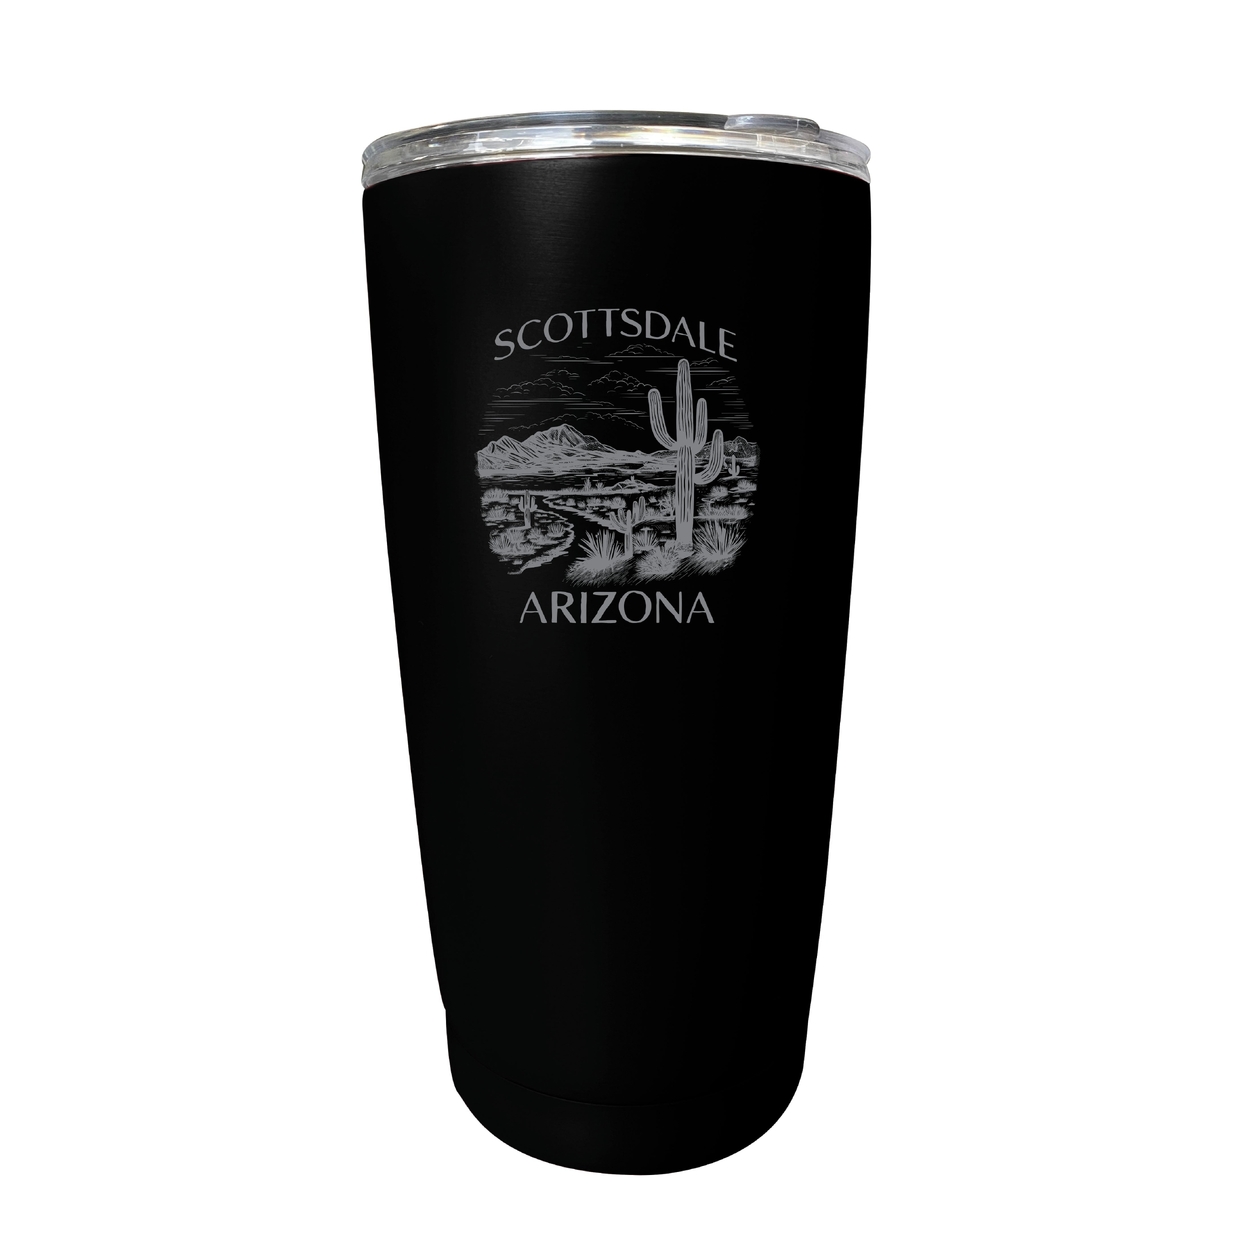 Scottsdale Arizona Souvenir 16 Oz Engraved Stainless Steel Insulated Tumbler - Black,,Single Unit